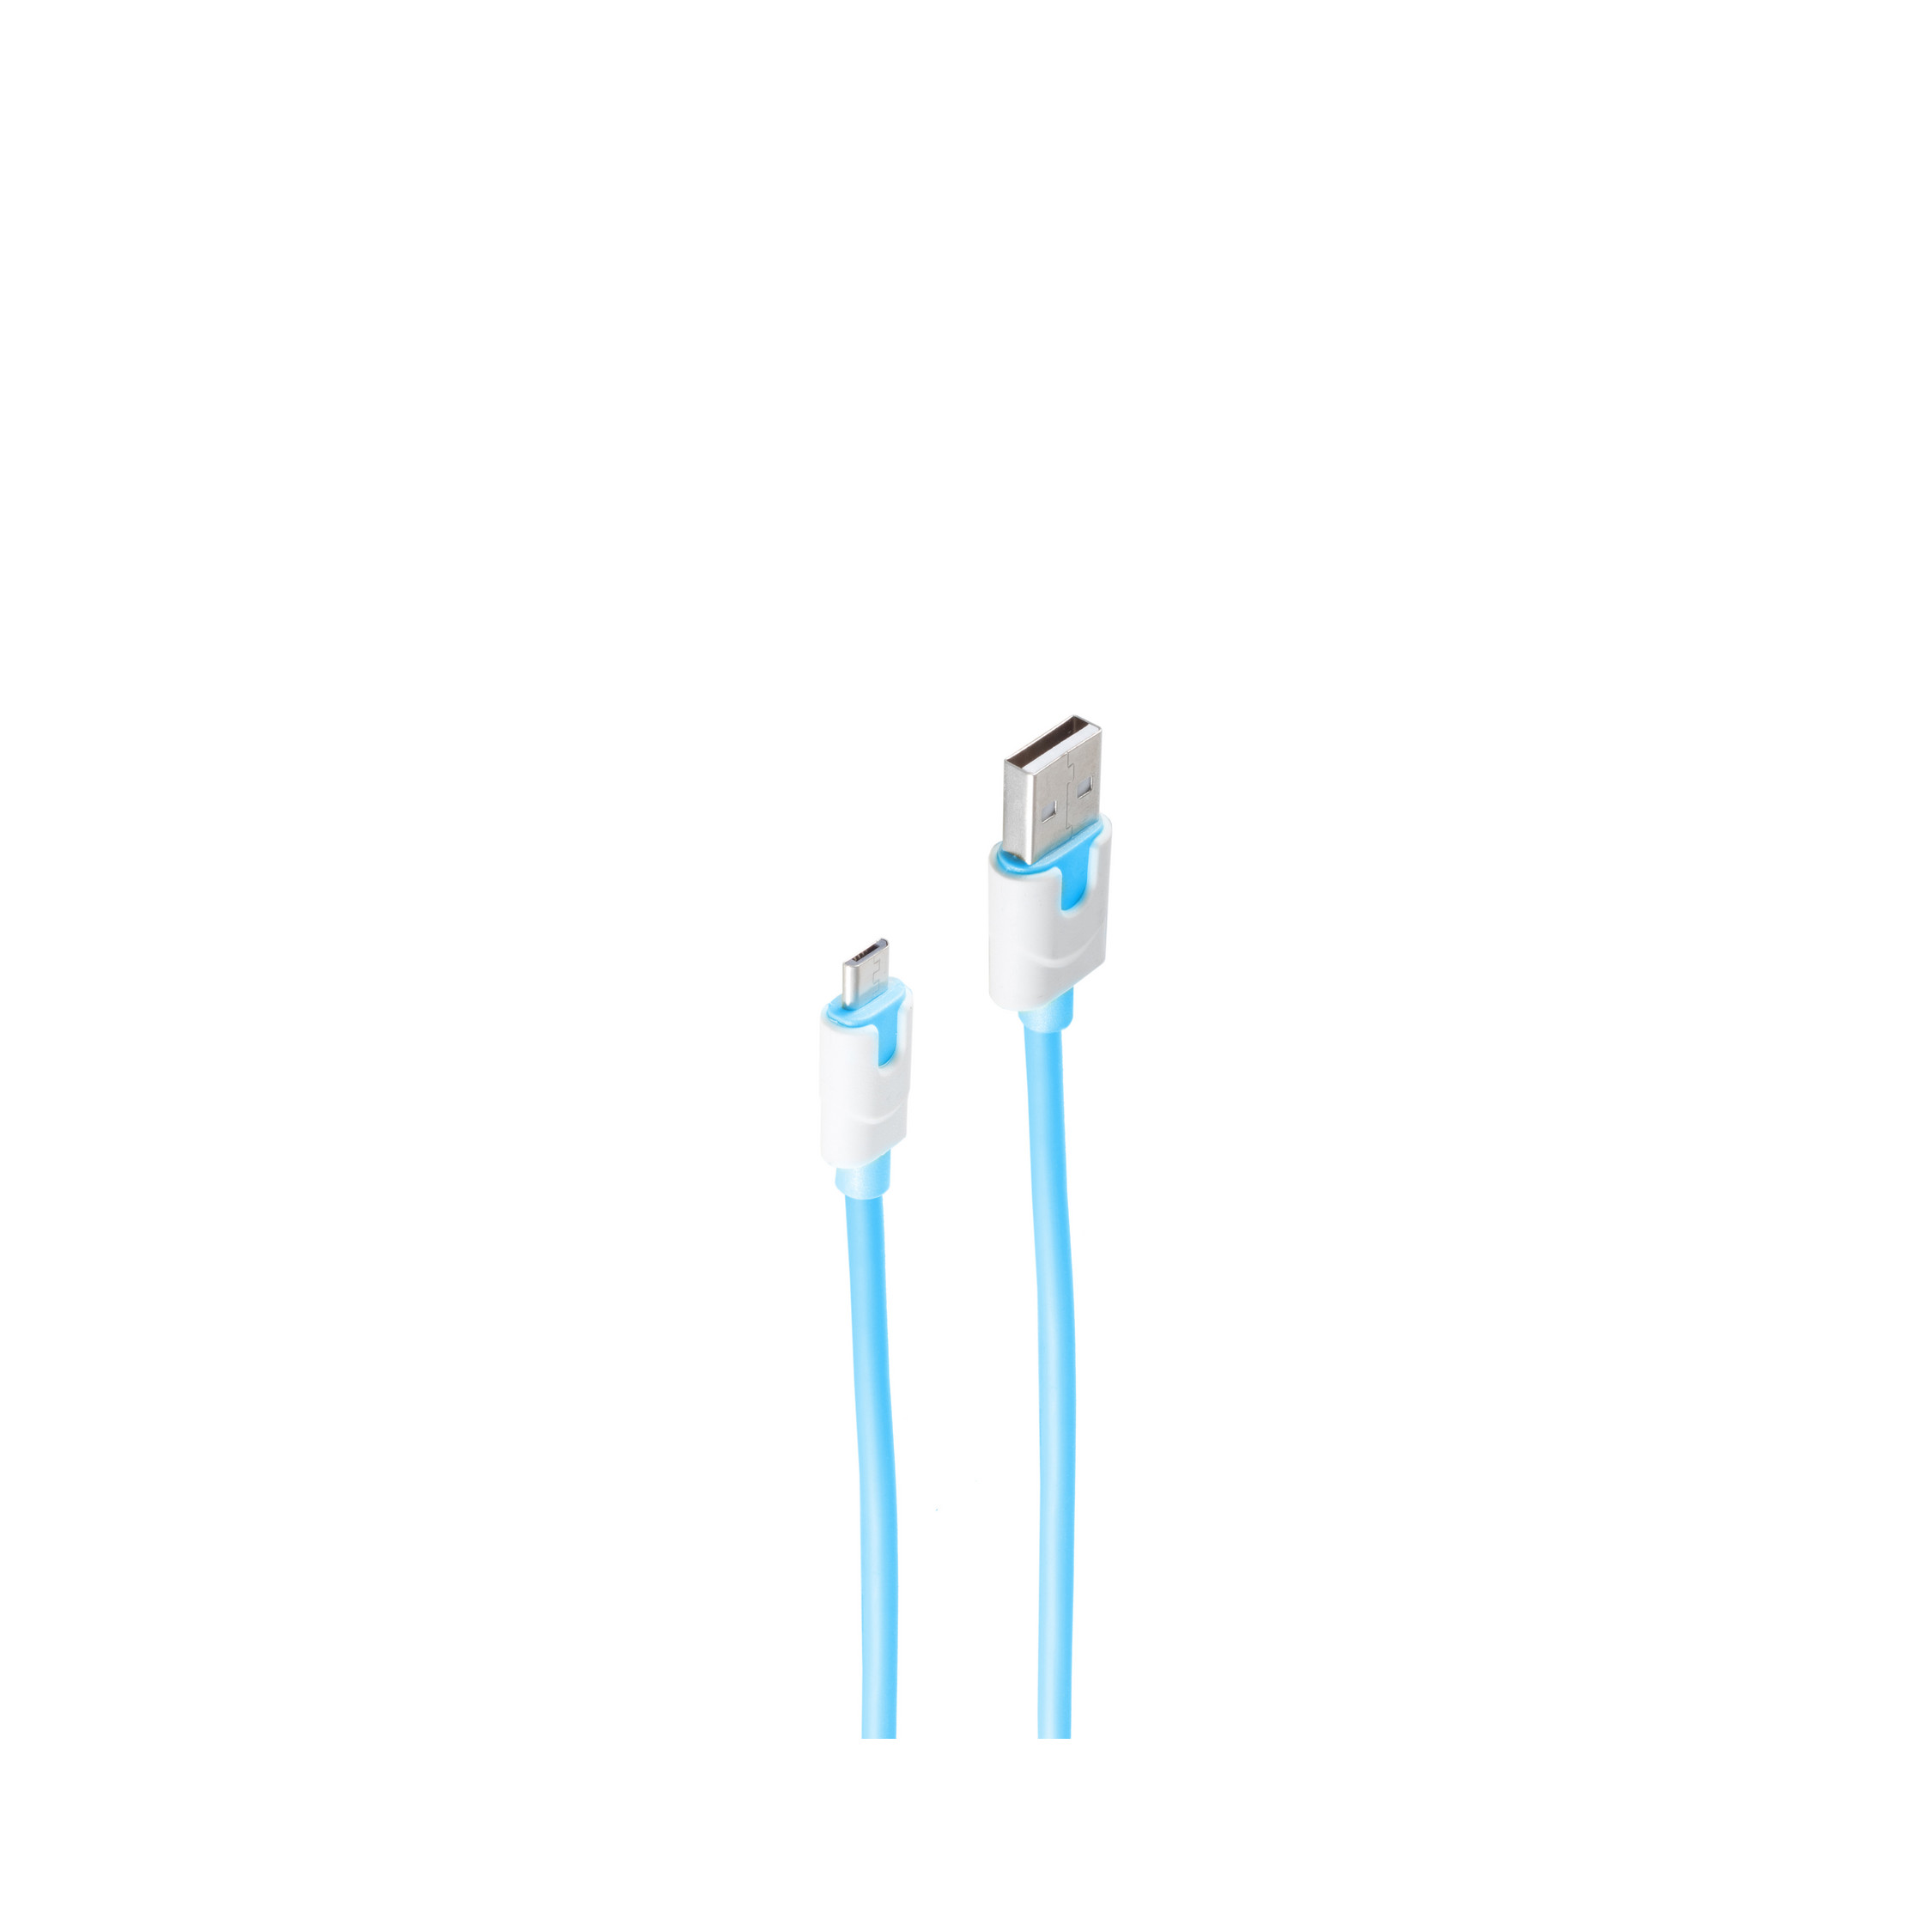 SHIVERPEAKS m, Stecker Micro USB B, USB-Ladekabel blau, Ladekabel, A 2m, 2 USB auf blau